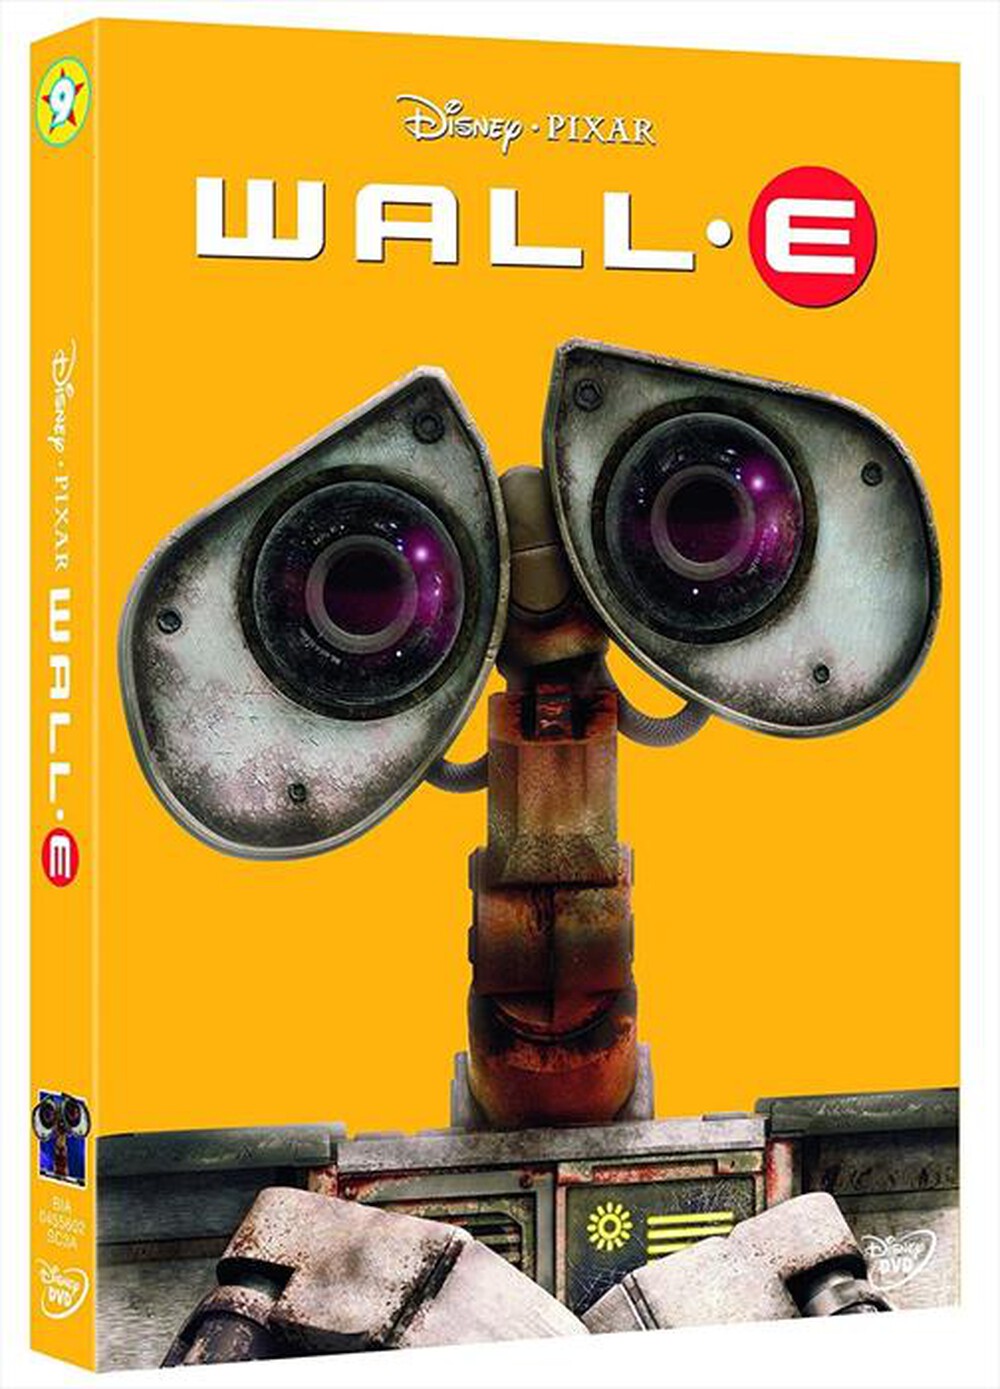 "EAGLE PICTURES - Wall-E (SE)"